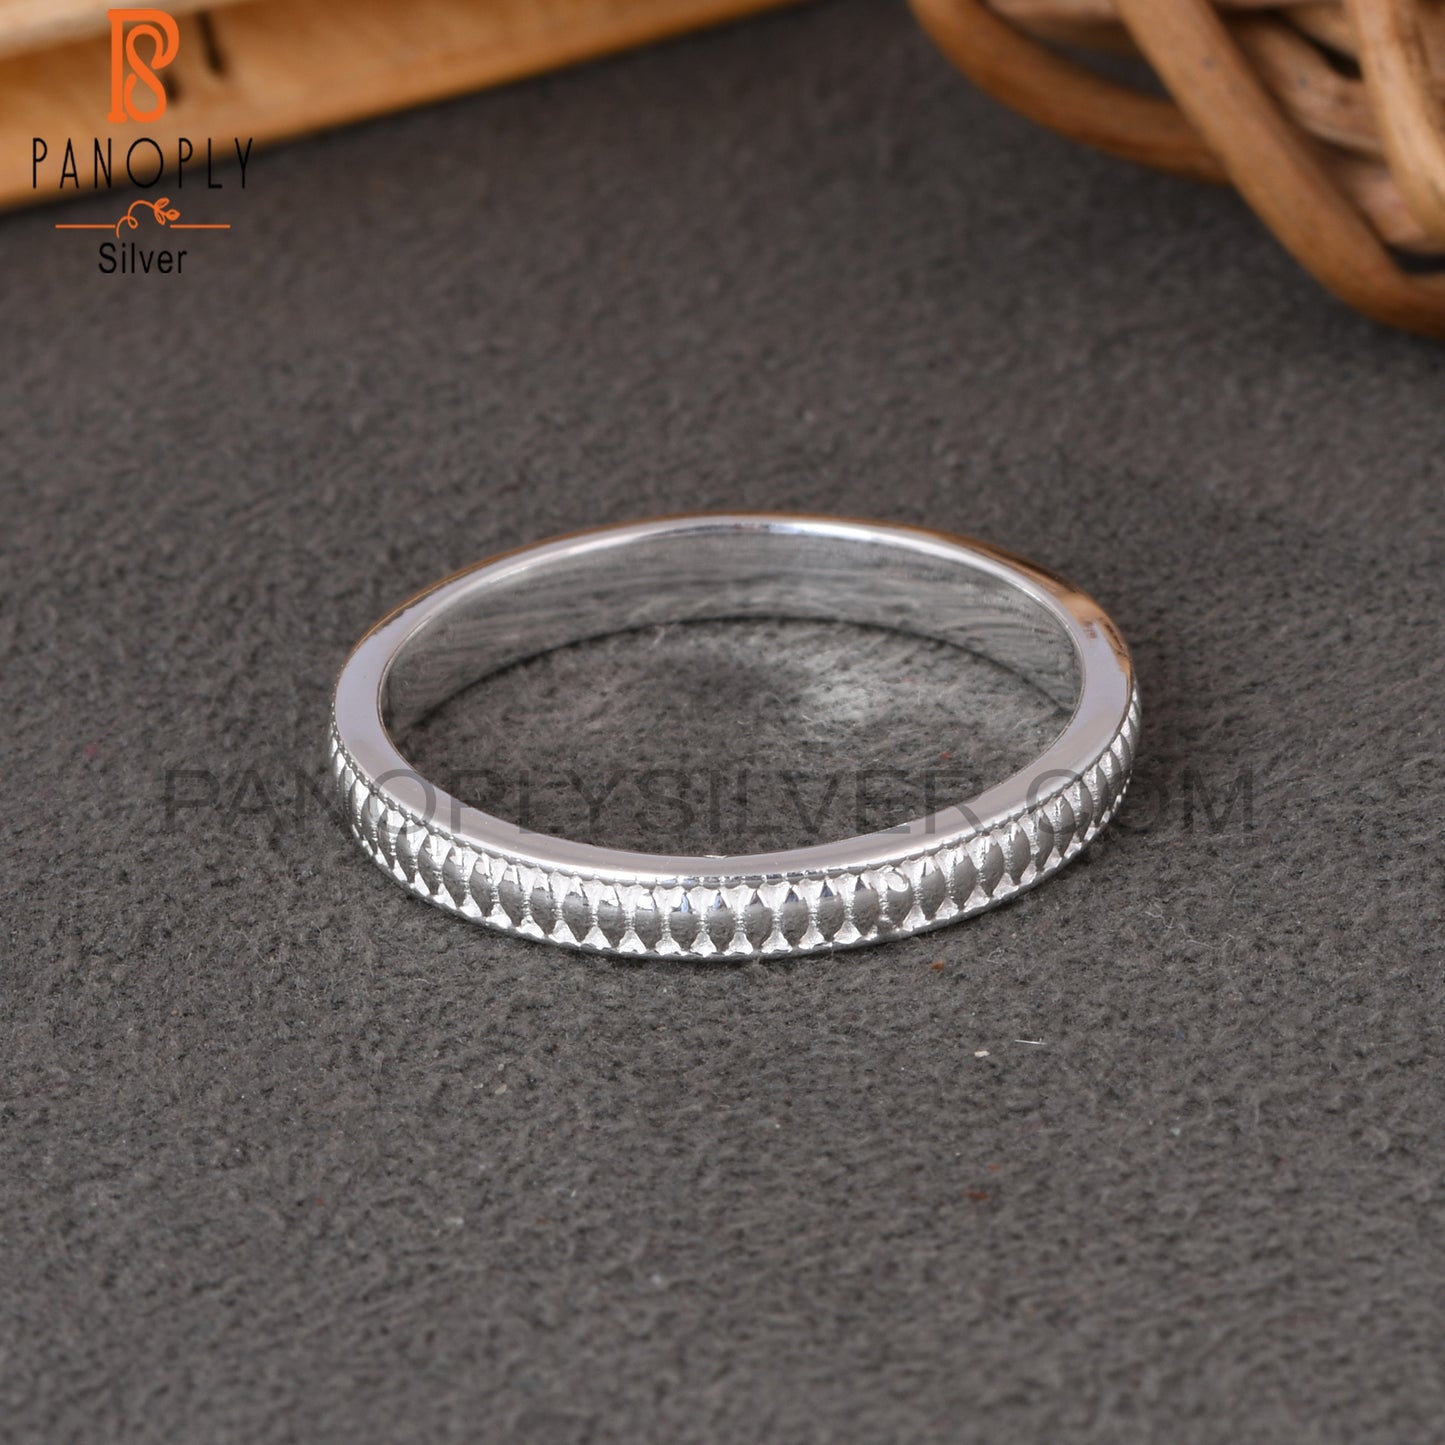 Handmade 925 Sterling Silver Designer Ring